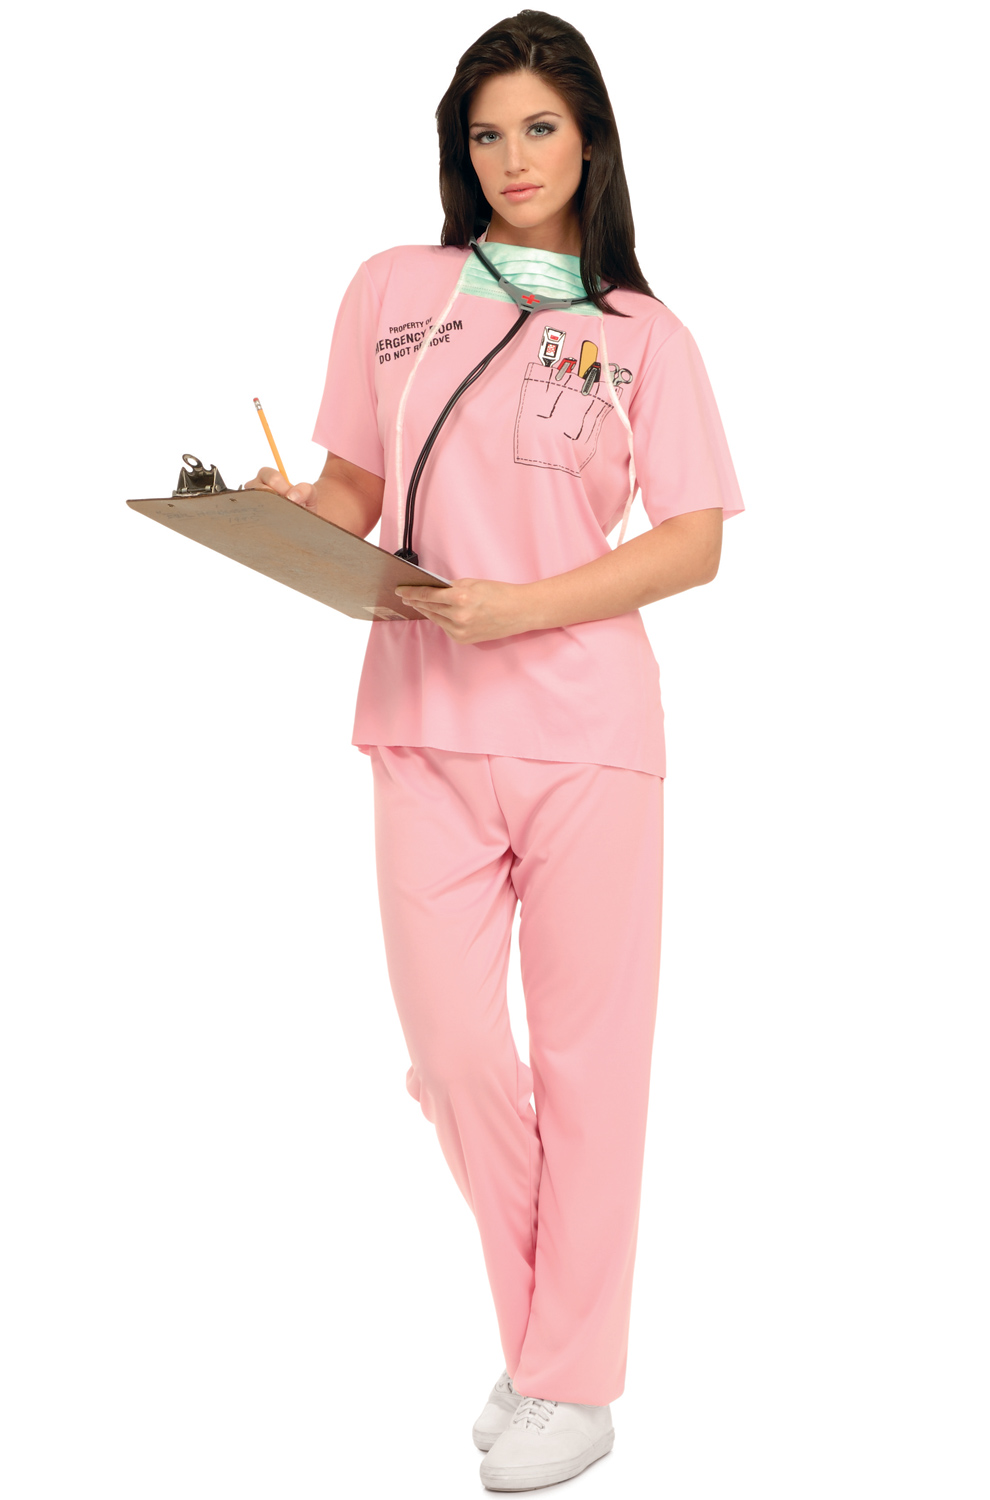 Adult Nurse Outfit 17